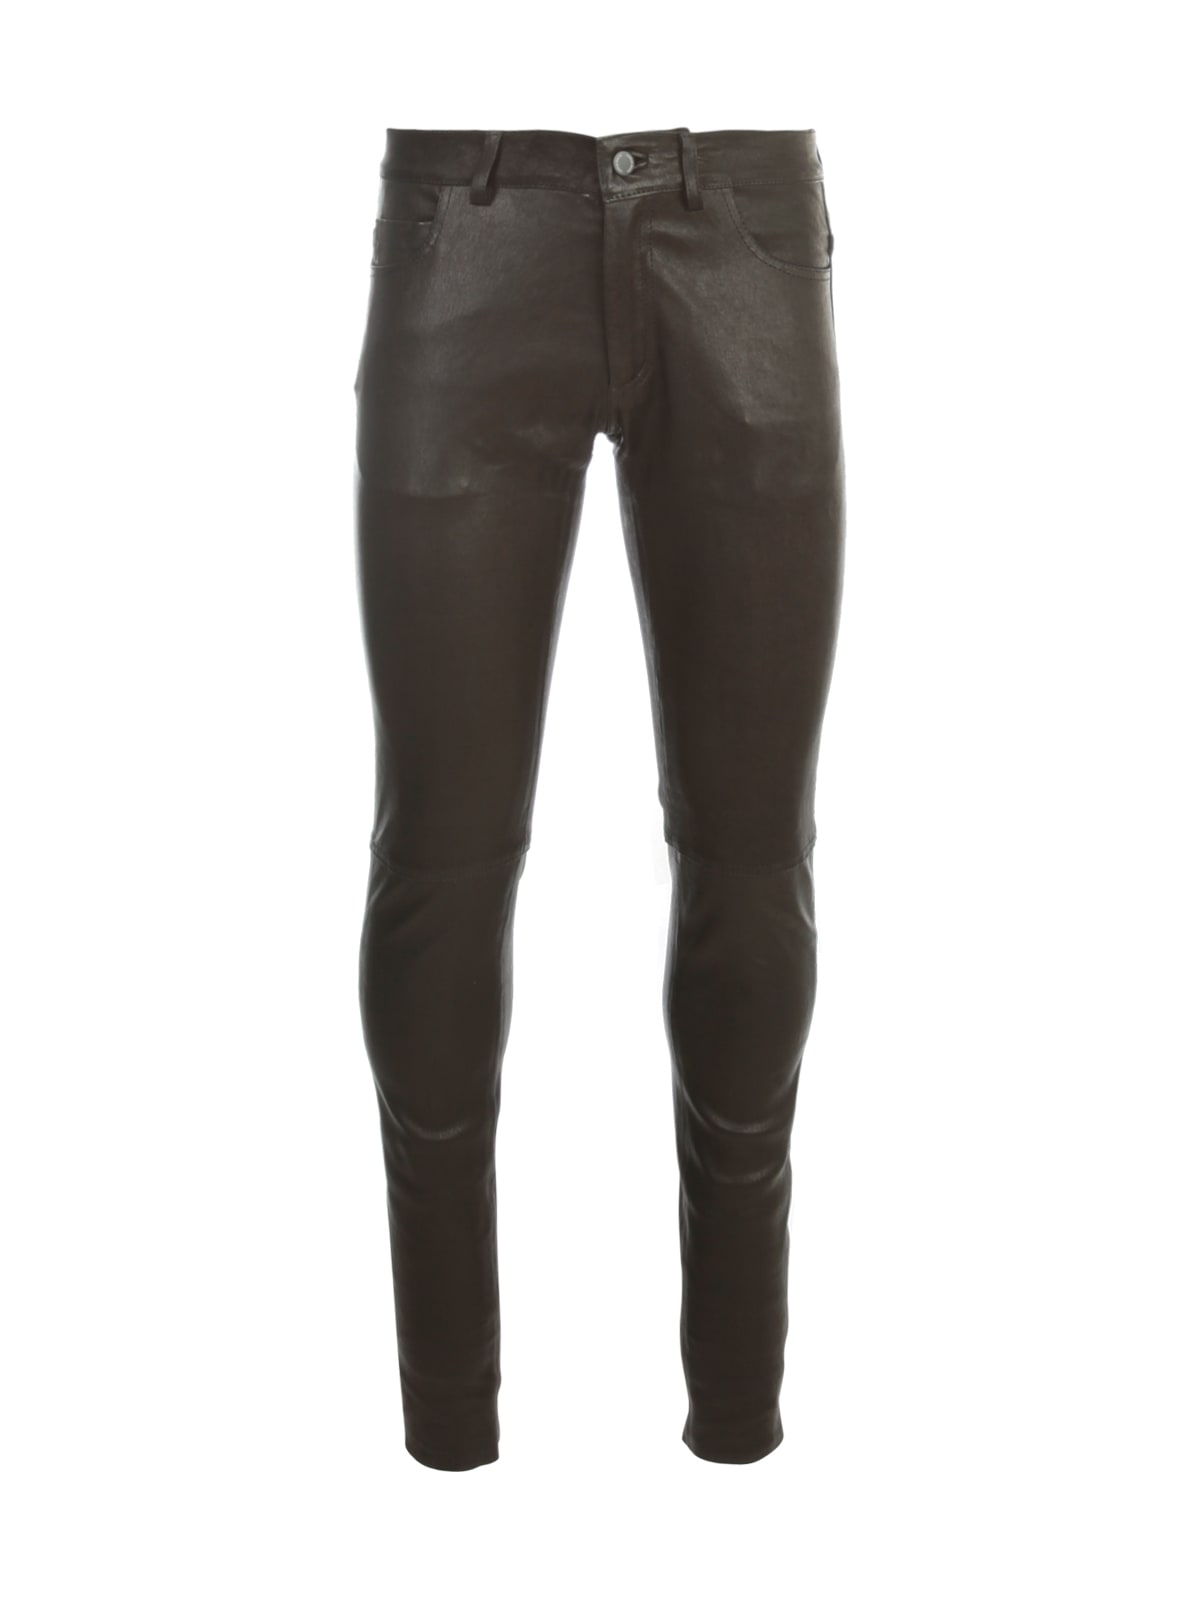 Giorgio Brato Leather Pants